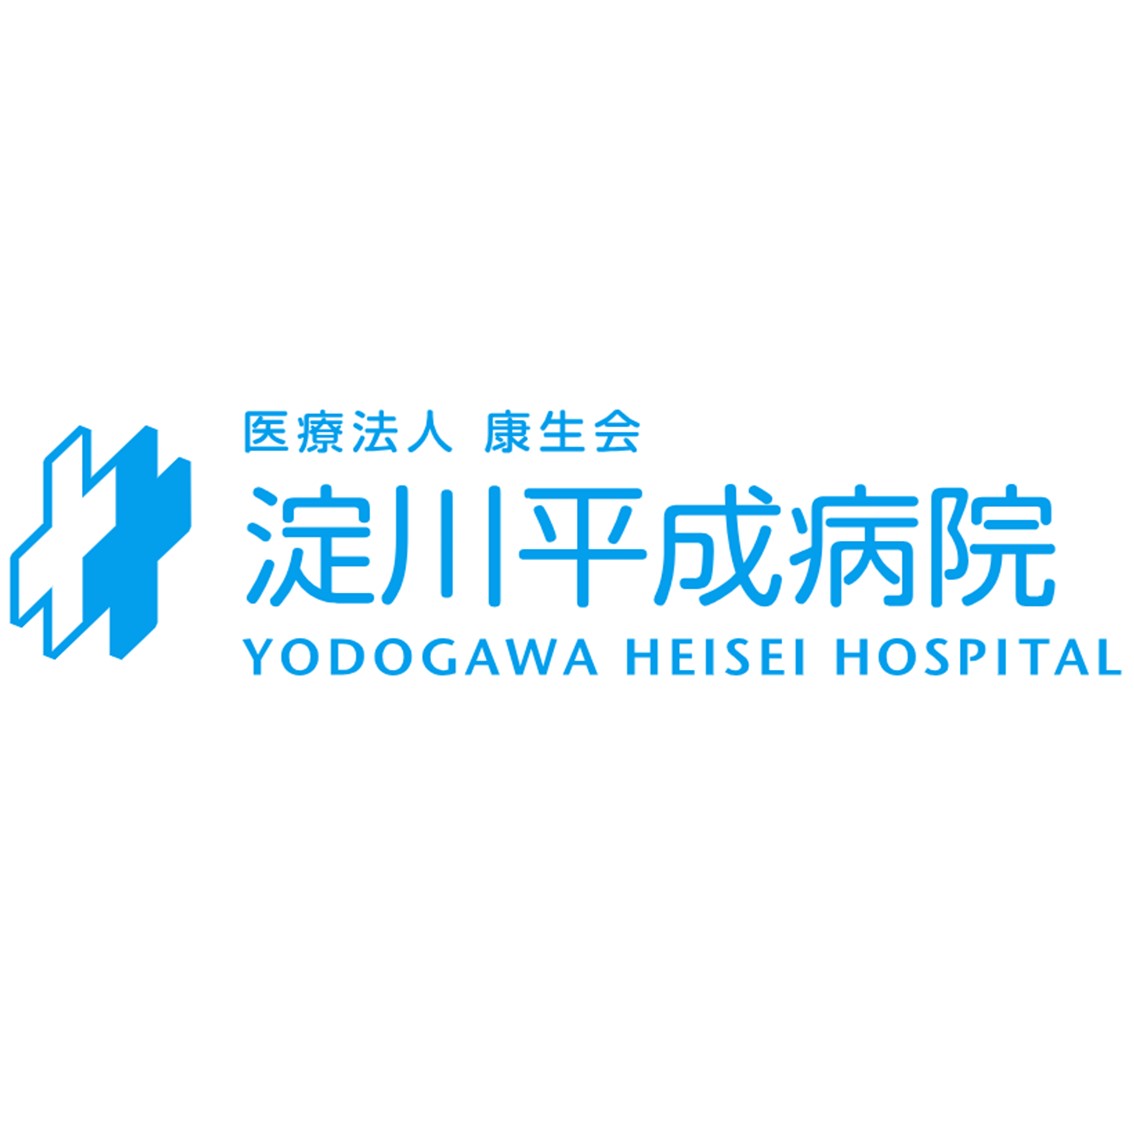 Yodogawa Heisei Hospital(另開新視窗)